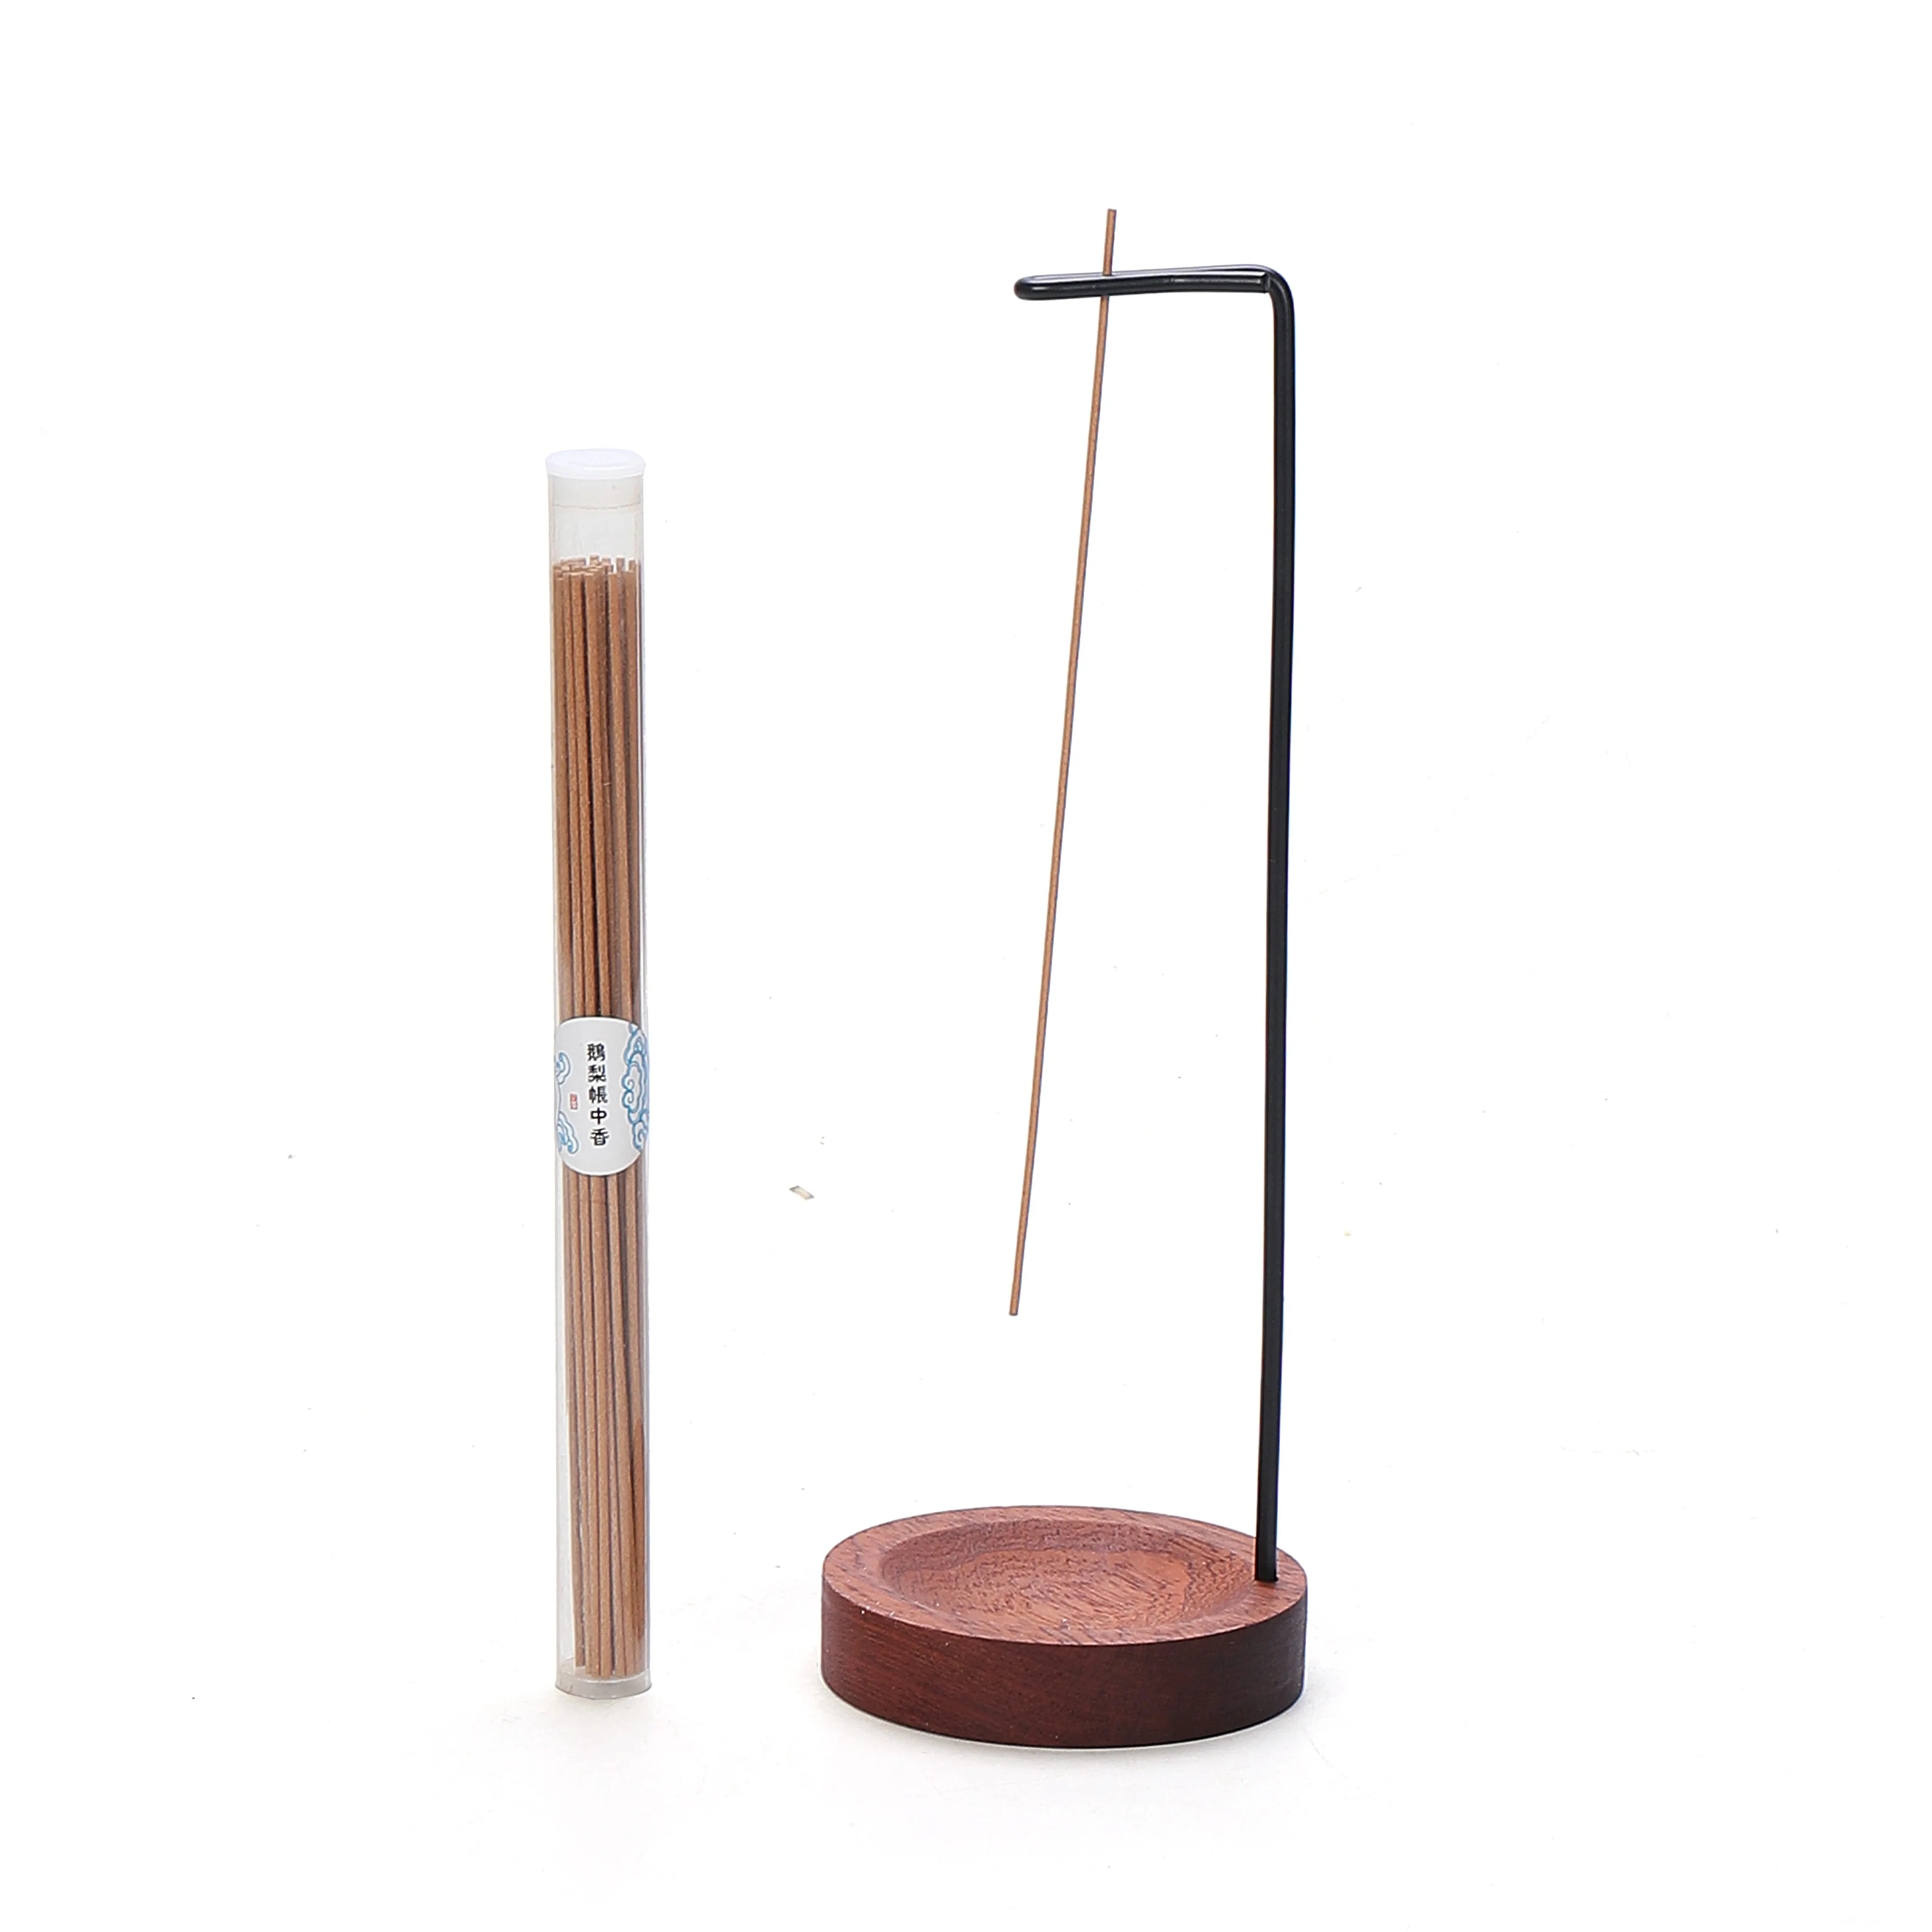 

hotel aromatherapy luxury fragrance incense burner ash catcher incense scent stick holder For Home Decor